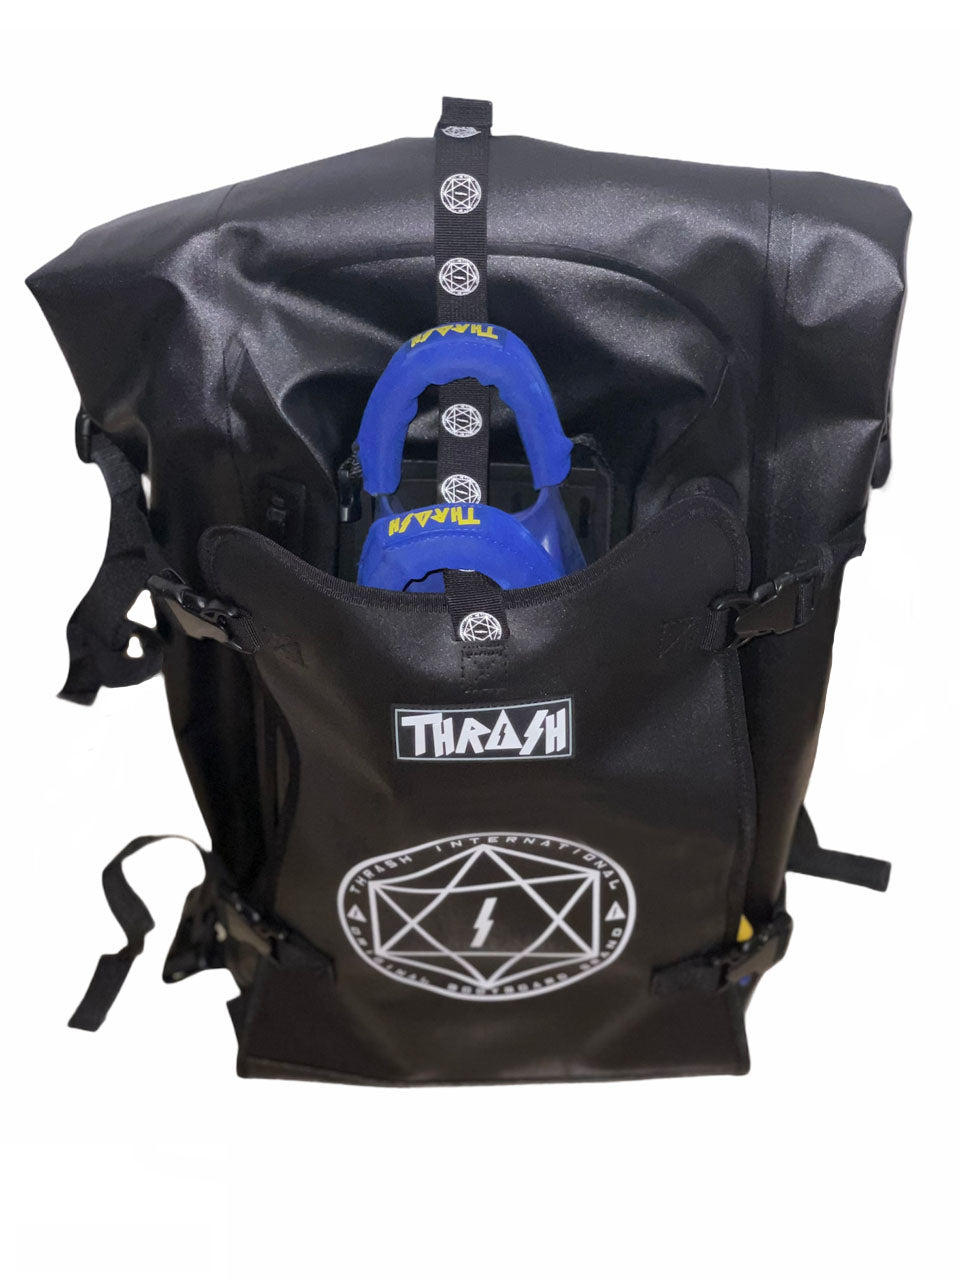 Thrash Wet/Dry Bag w Hook System 35L